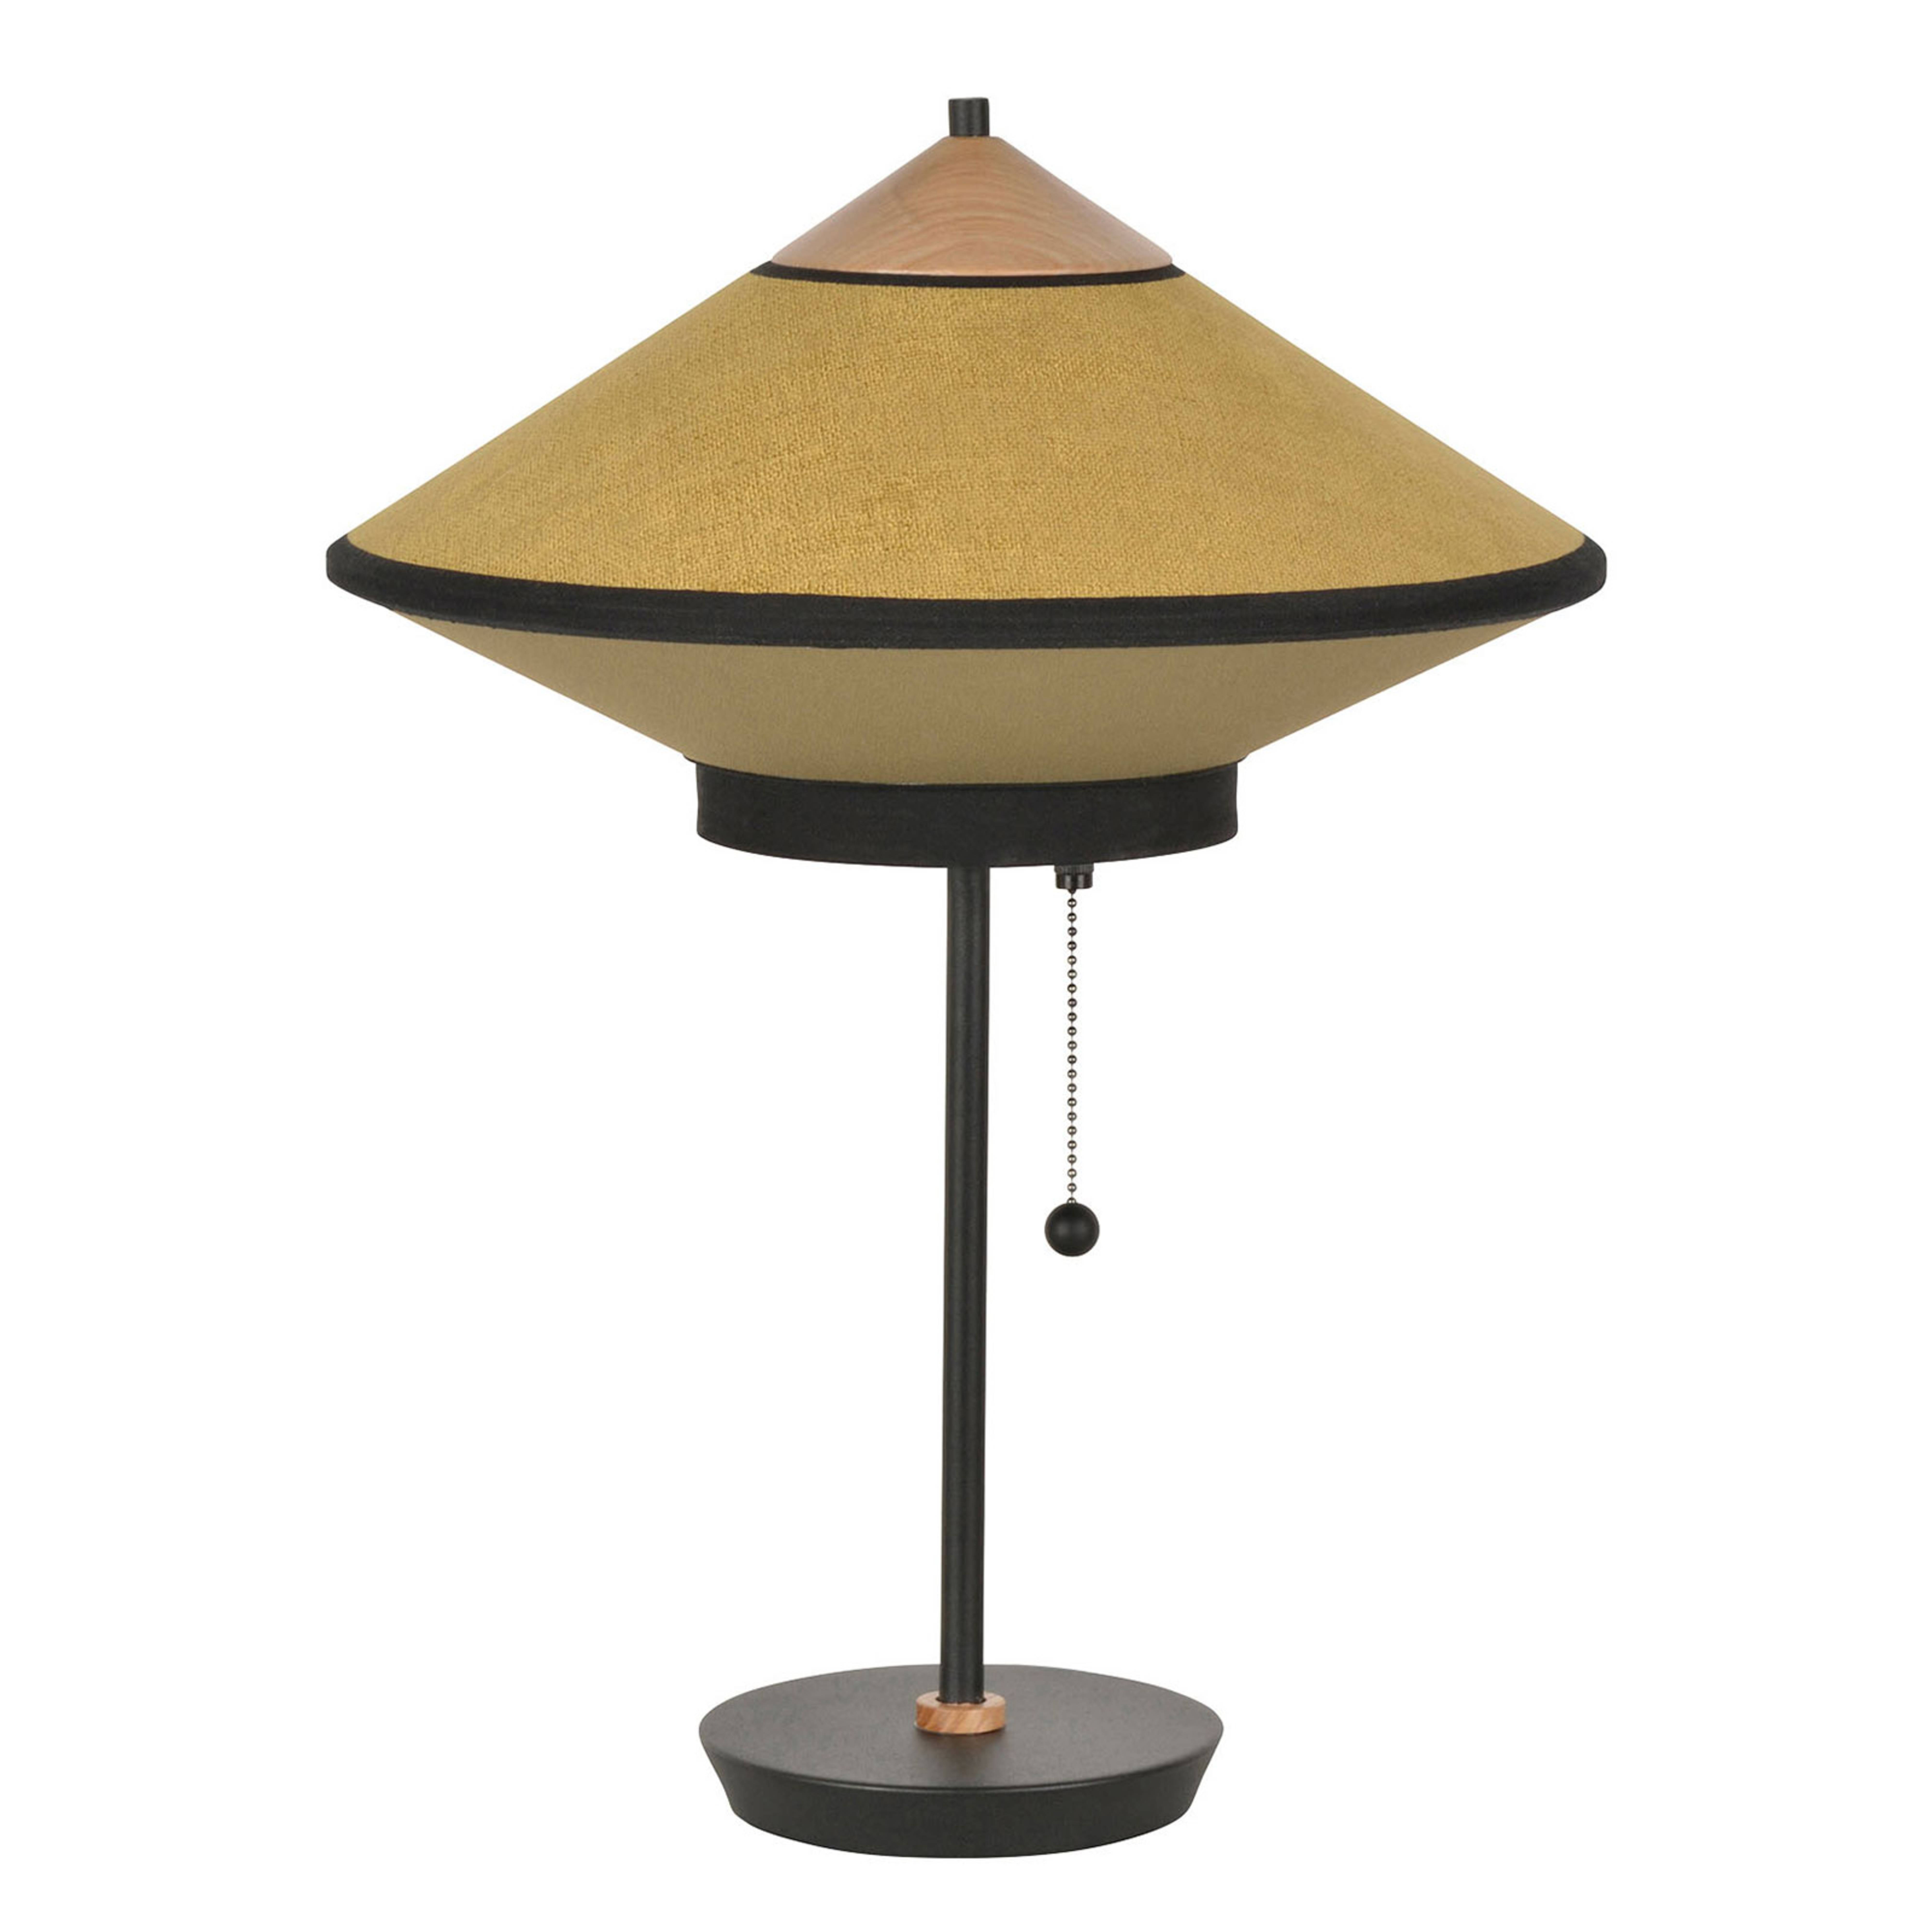 Forestier Cymbal S lámpara de mesa, bronce